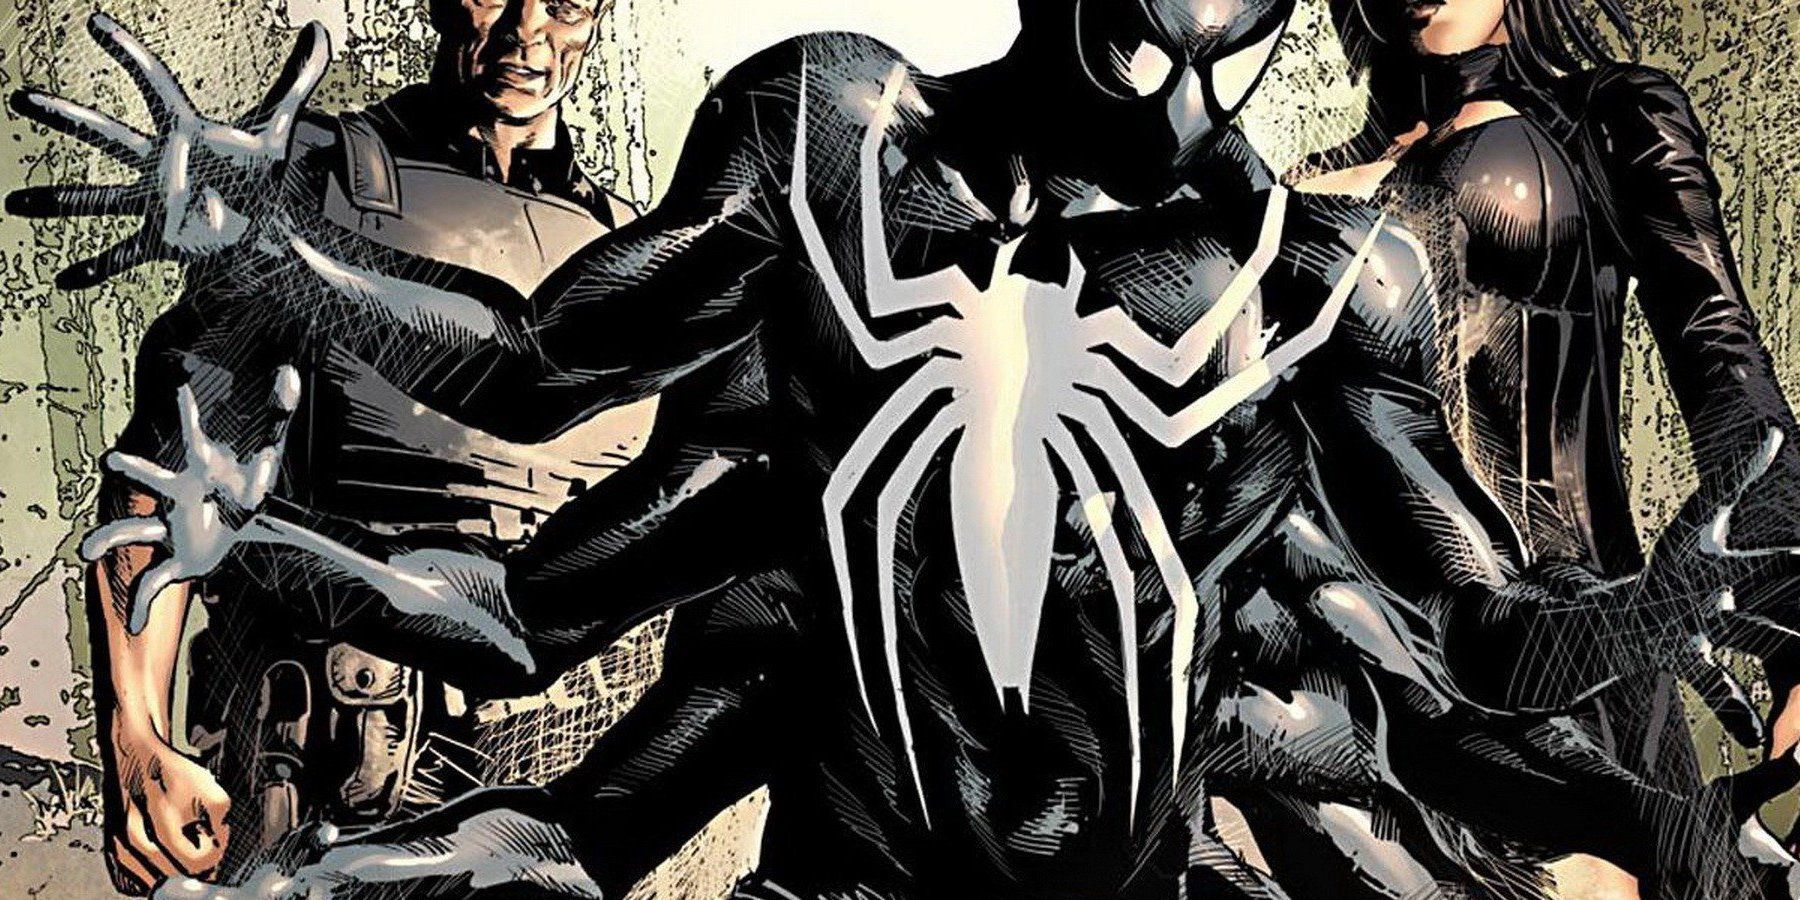 Ai Apaec in black Spider-Man suit with Norman Osborn in Marvel Comics